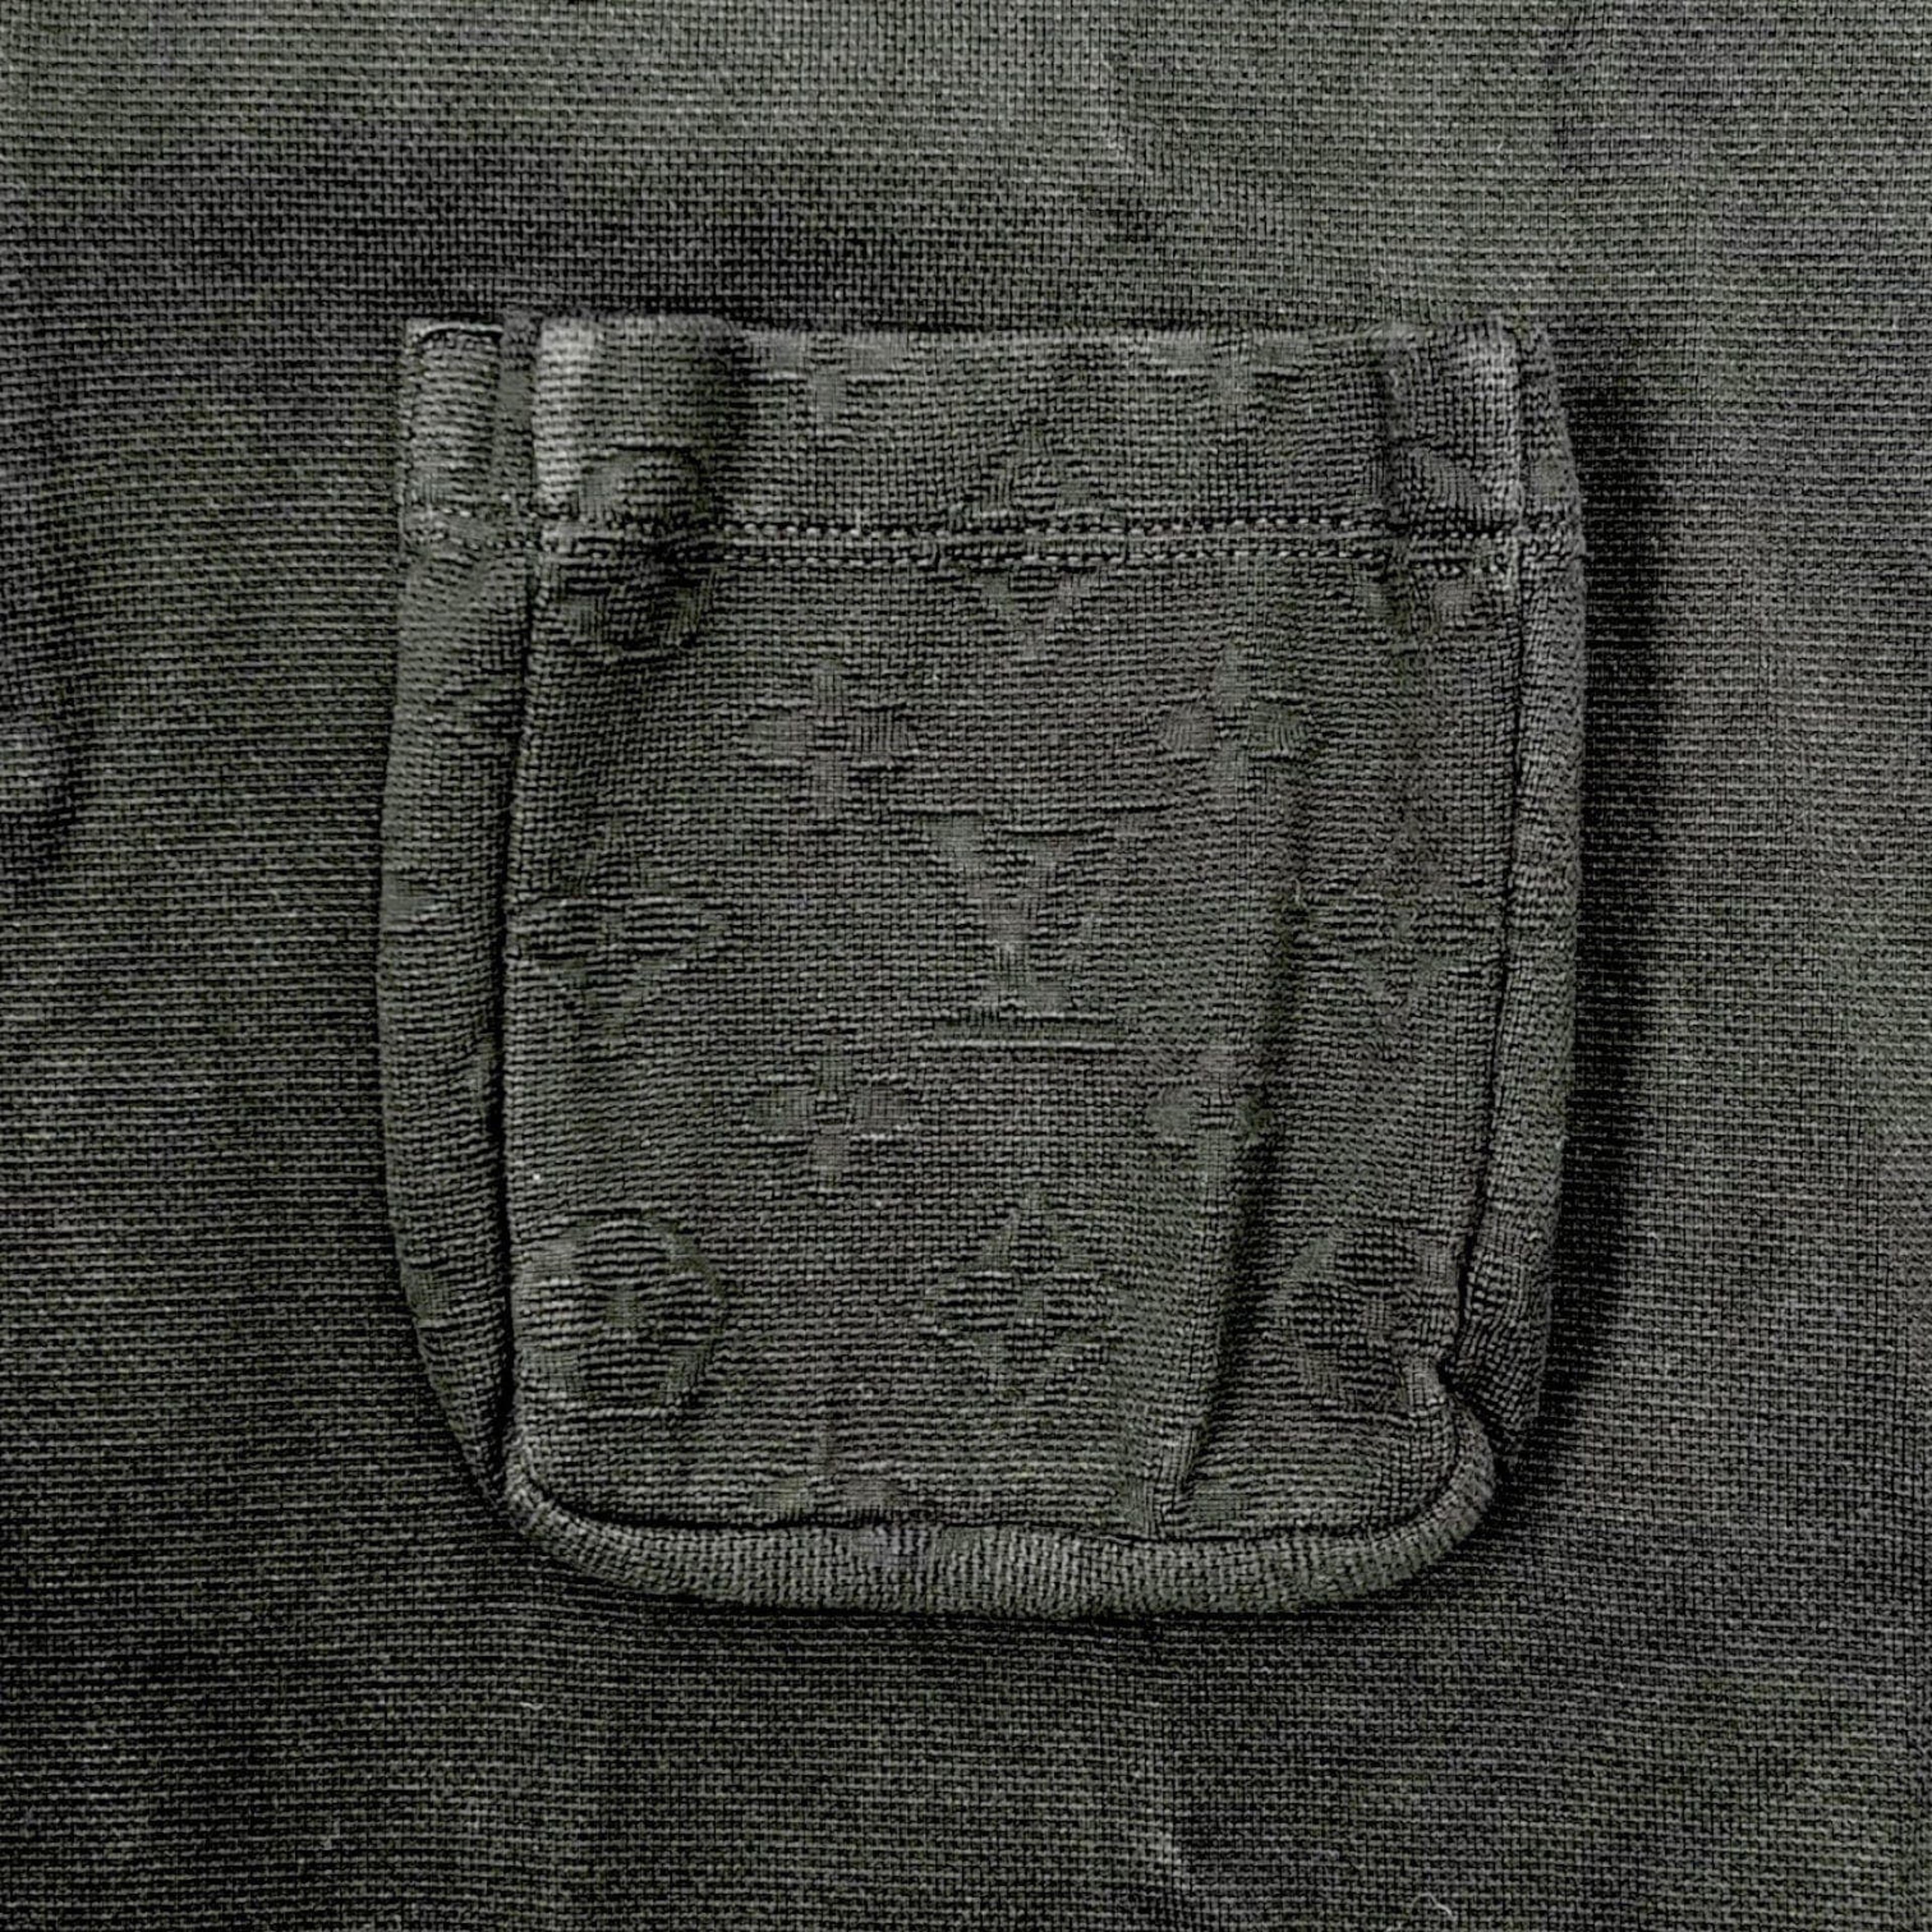 Alternate View 3 of Louis Vuitton Zip Polo Monogram Pocket Short Sleeve Tee Shirt Bl